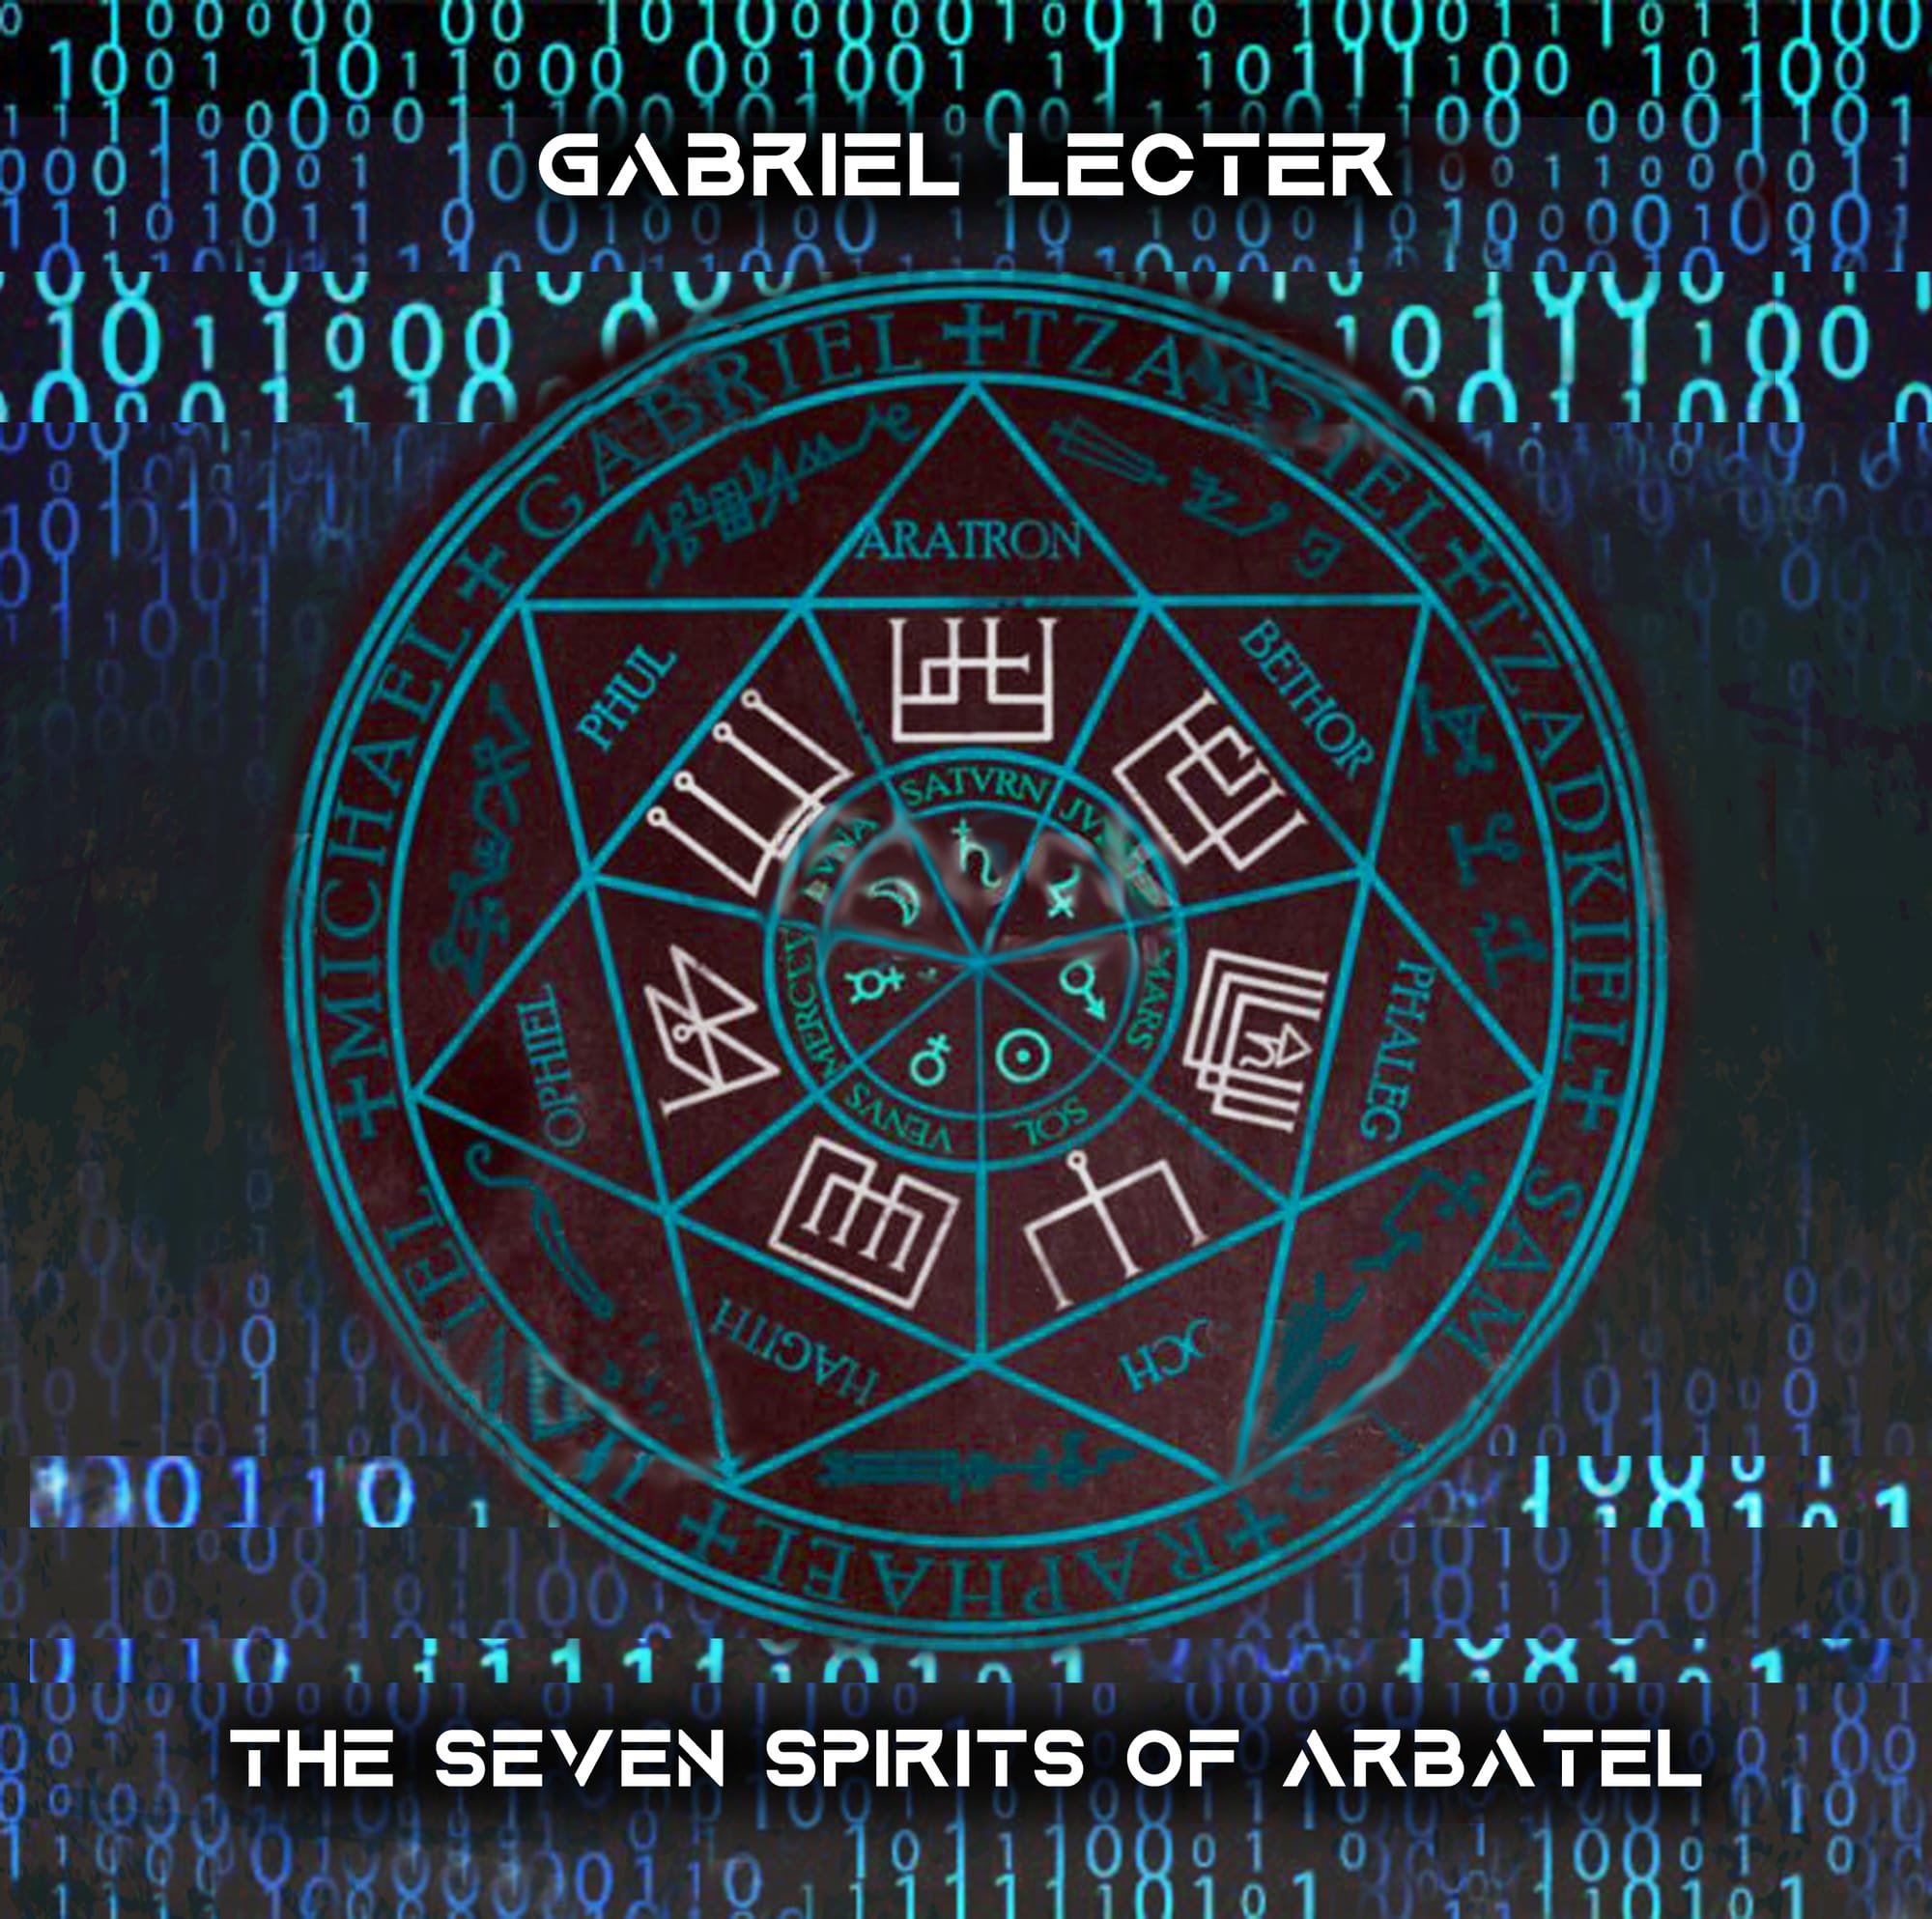 THE SEVEN SPIRITS OF ARBATEL